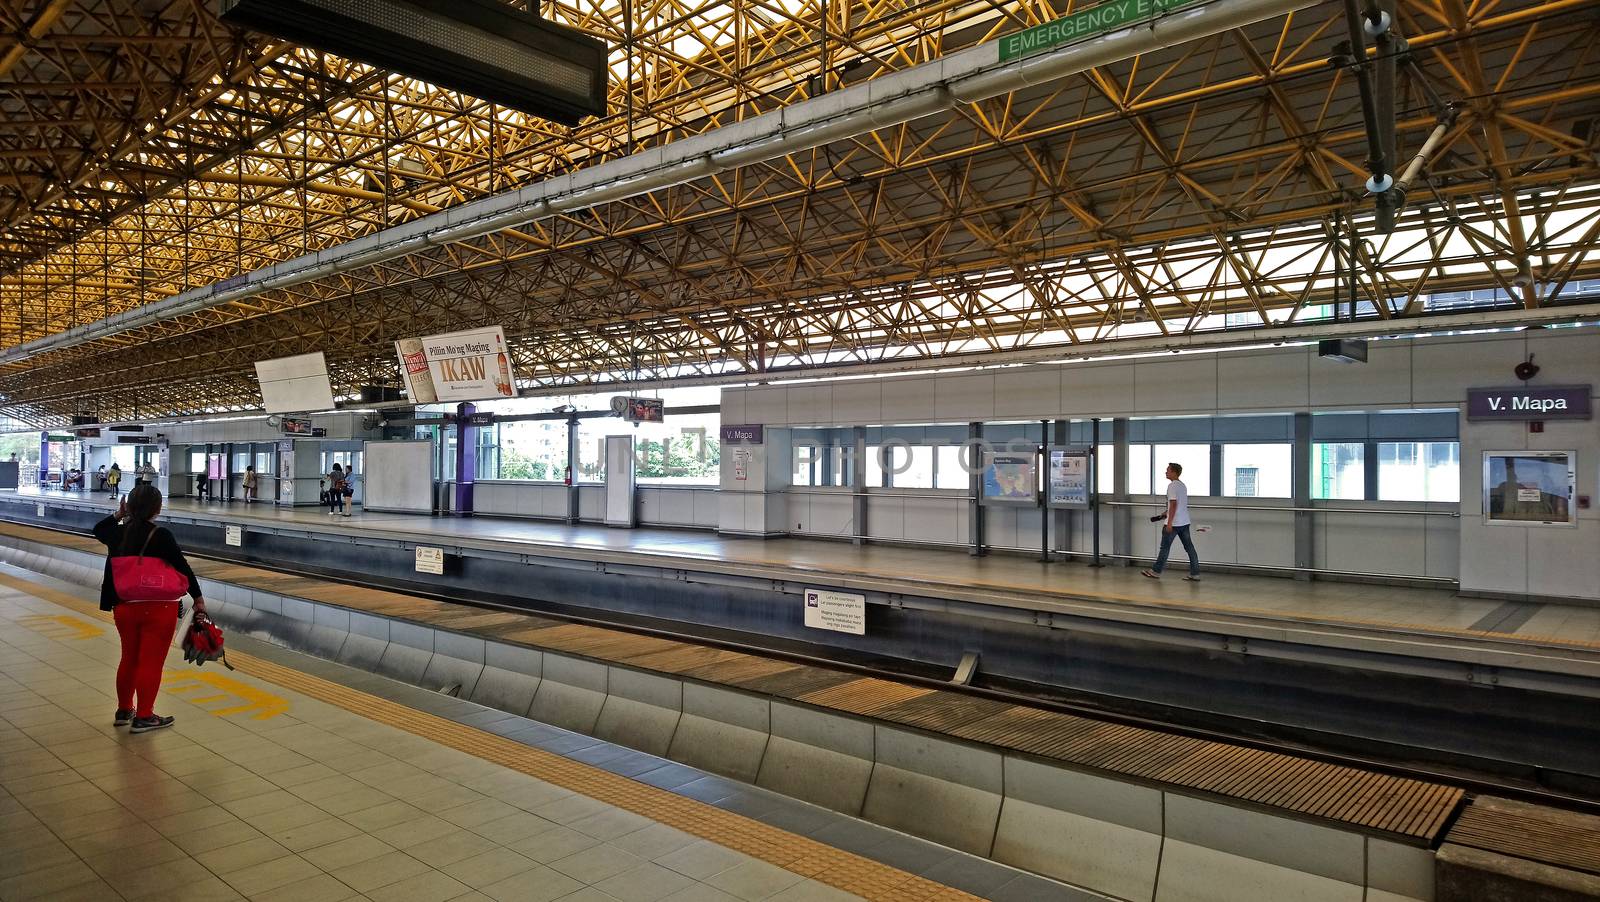 MANILA, PH - JAN 2 - Light rail transit 2 V. Mapa station platform on January 2, 2017 in Manila, Philippines.